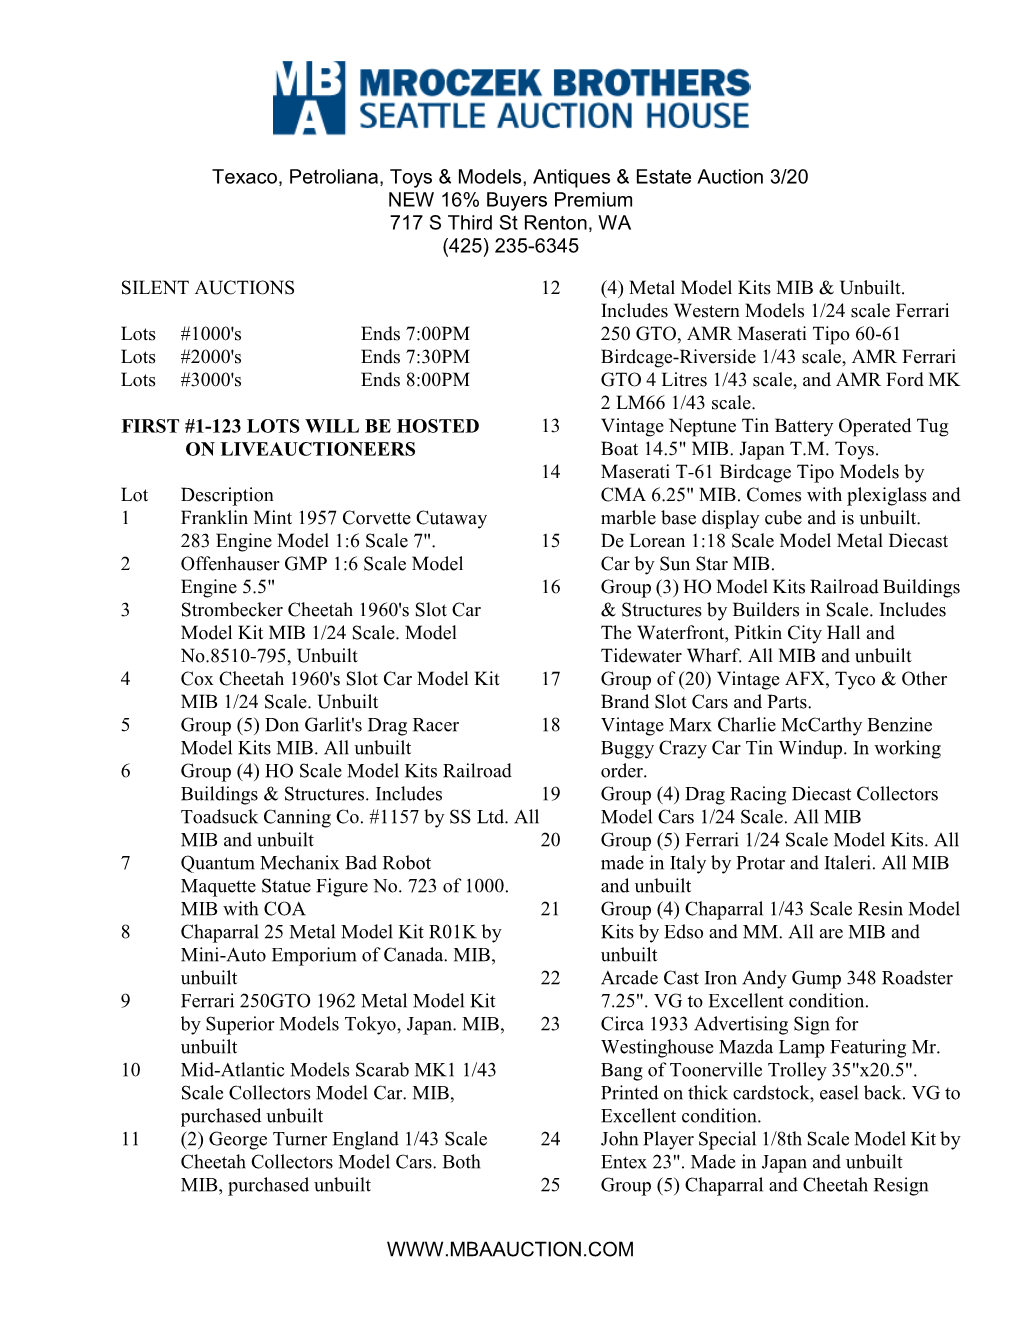 Texaco, Petroliana, Toys & Models, Antiques & Estate Auction 3/20 NEW 16% Buyers Premium 717 S Third St Renton, WA